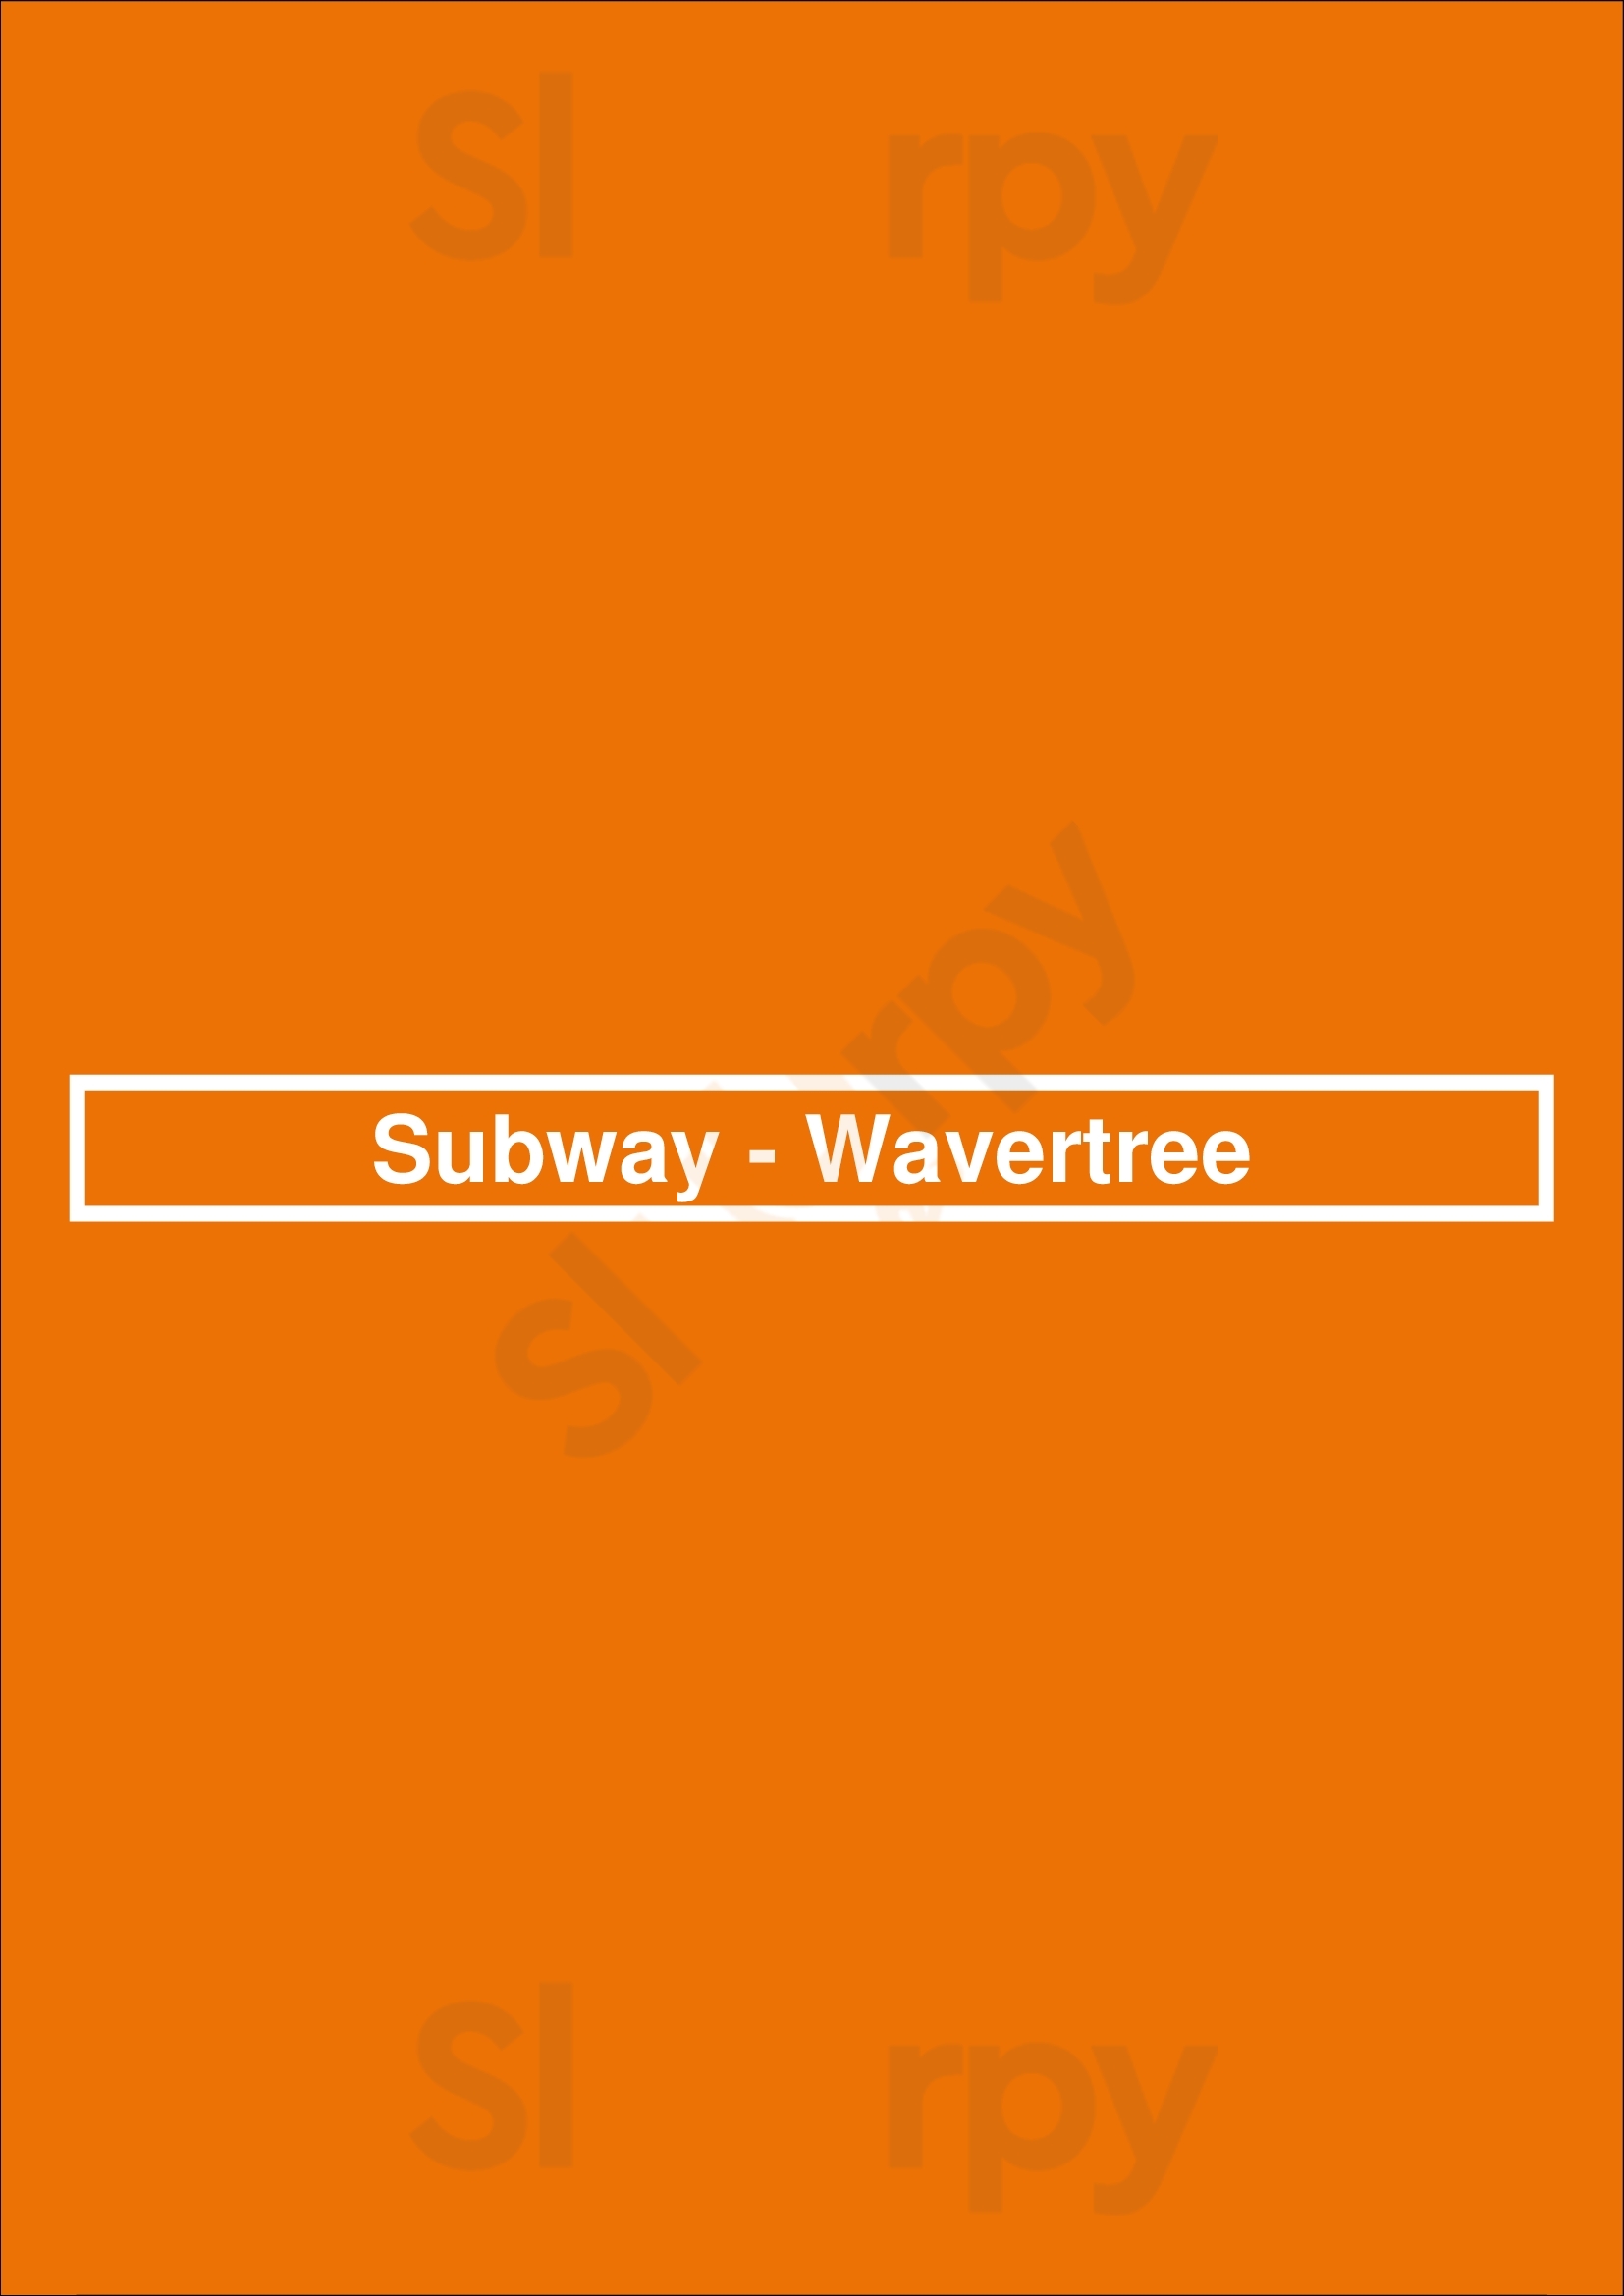 Subway - Wavertree Liverpool Menu - 1